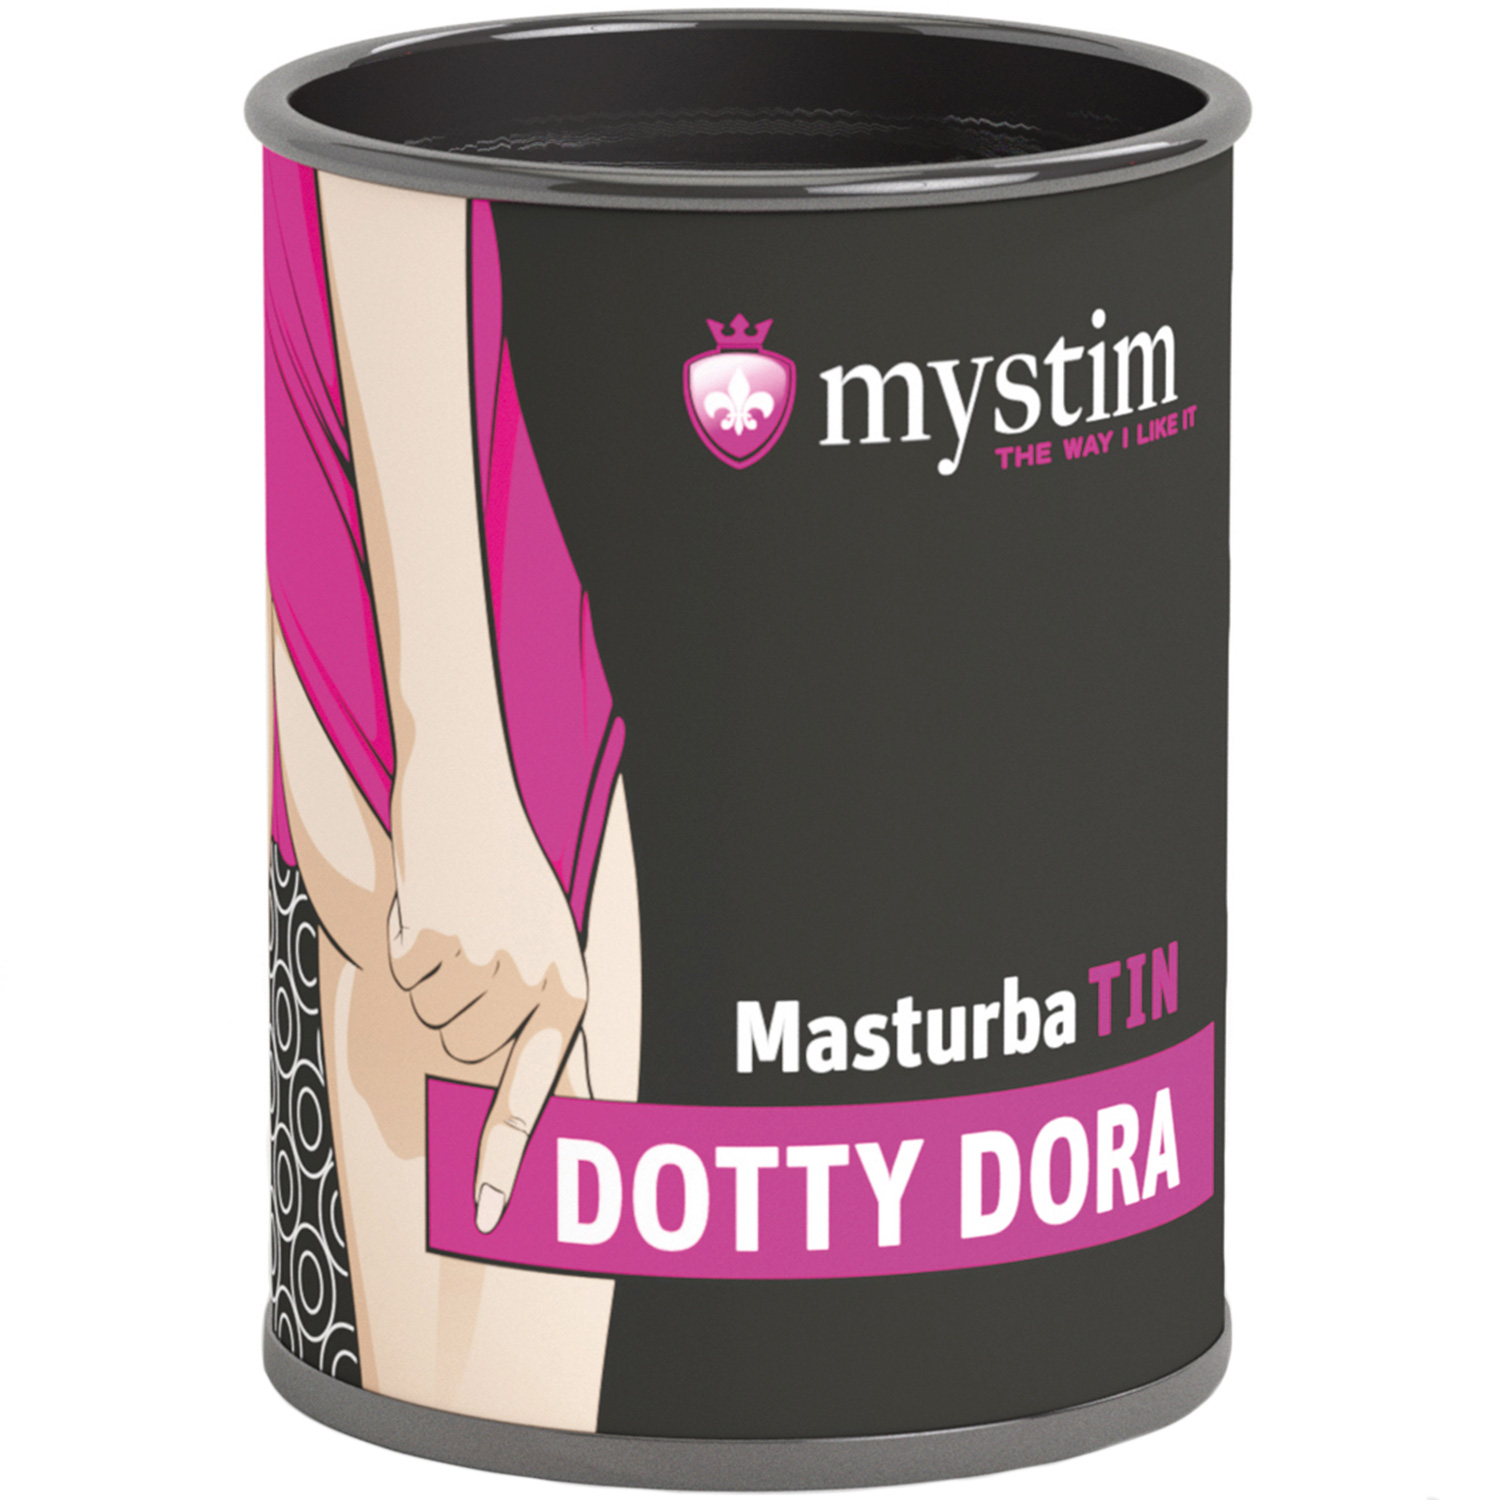 Mystim Dotty Dora Handjobb för Män - Mystim